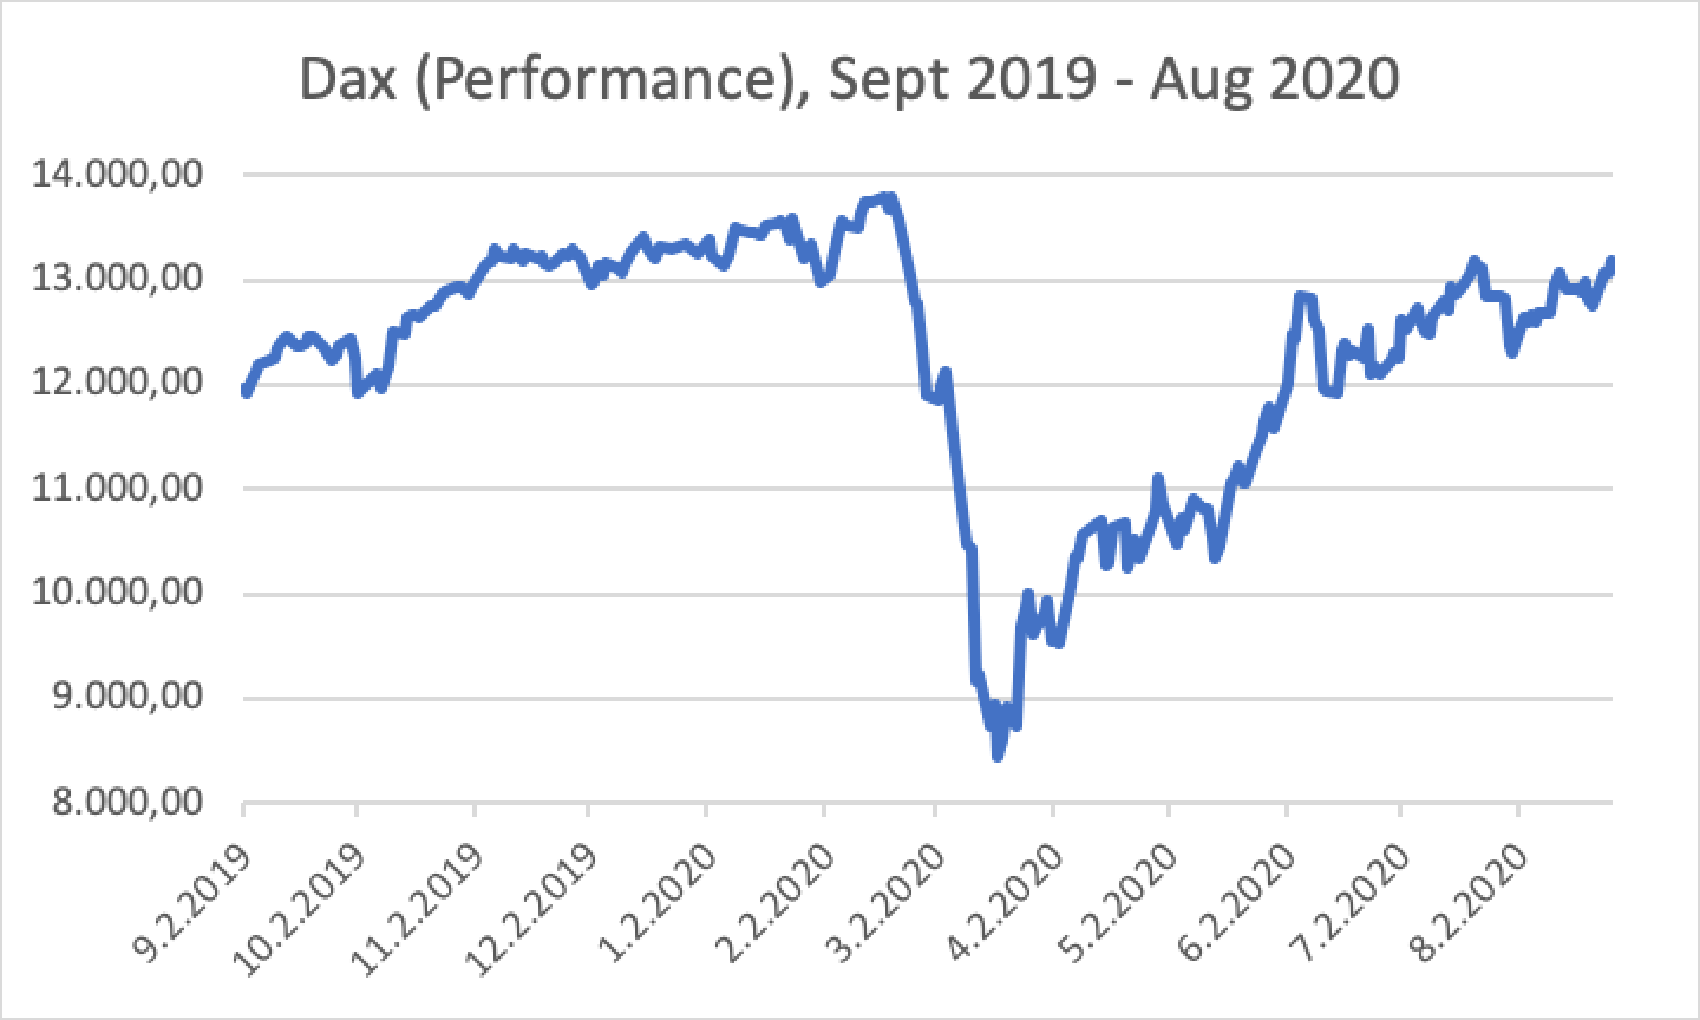 Dax Performance Sept 2019 - Aug 2020